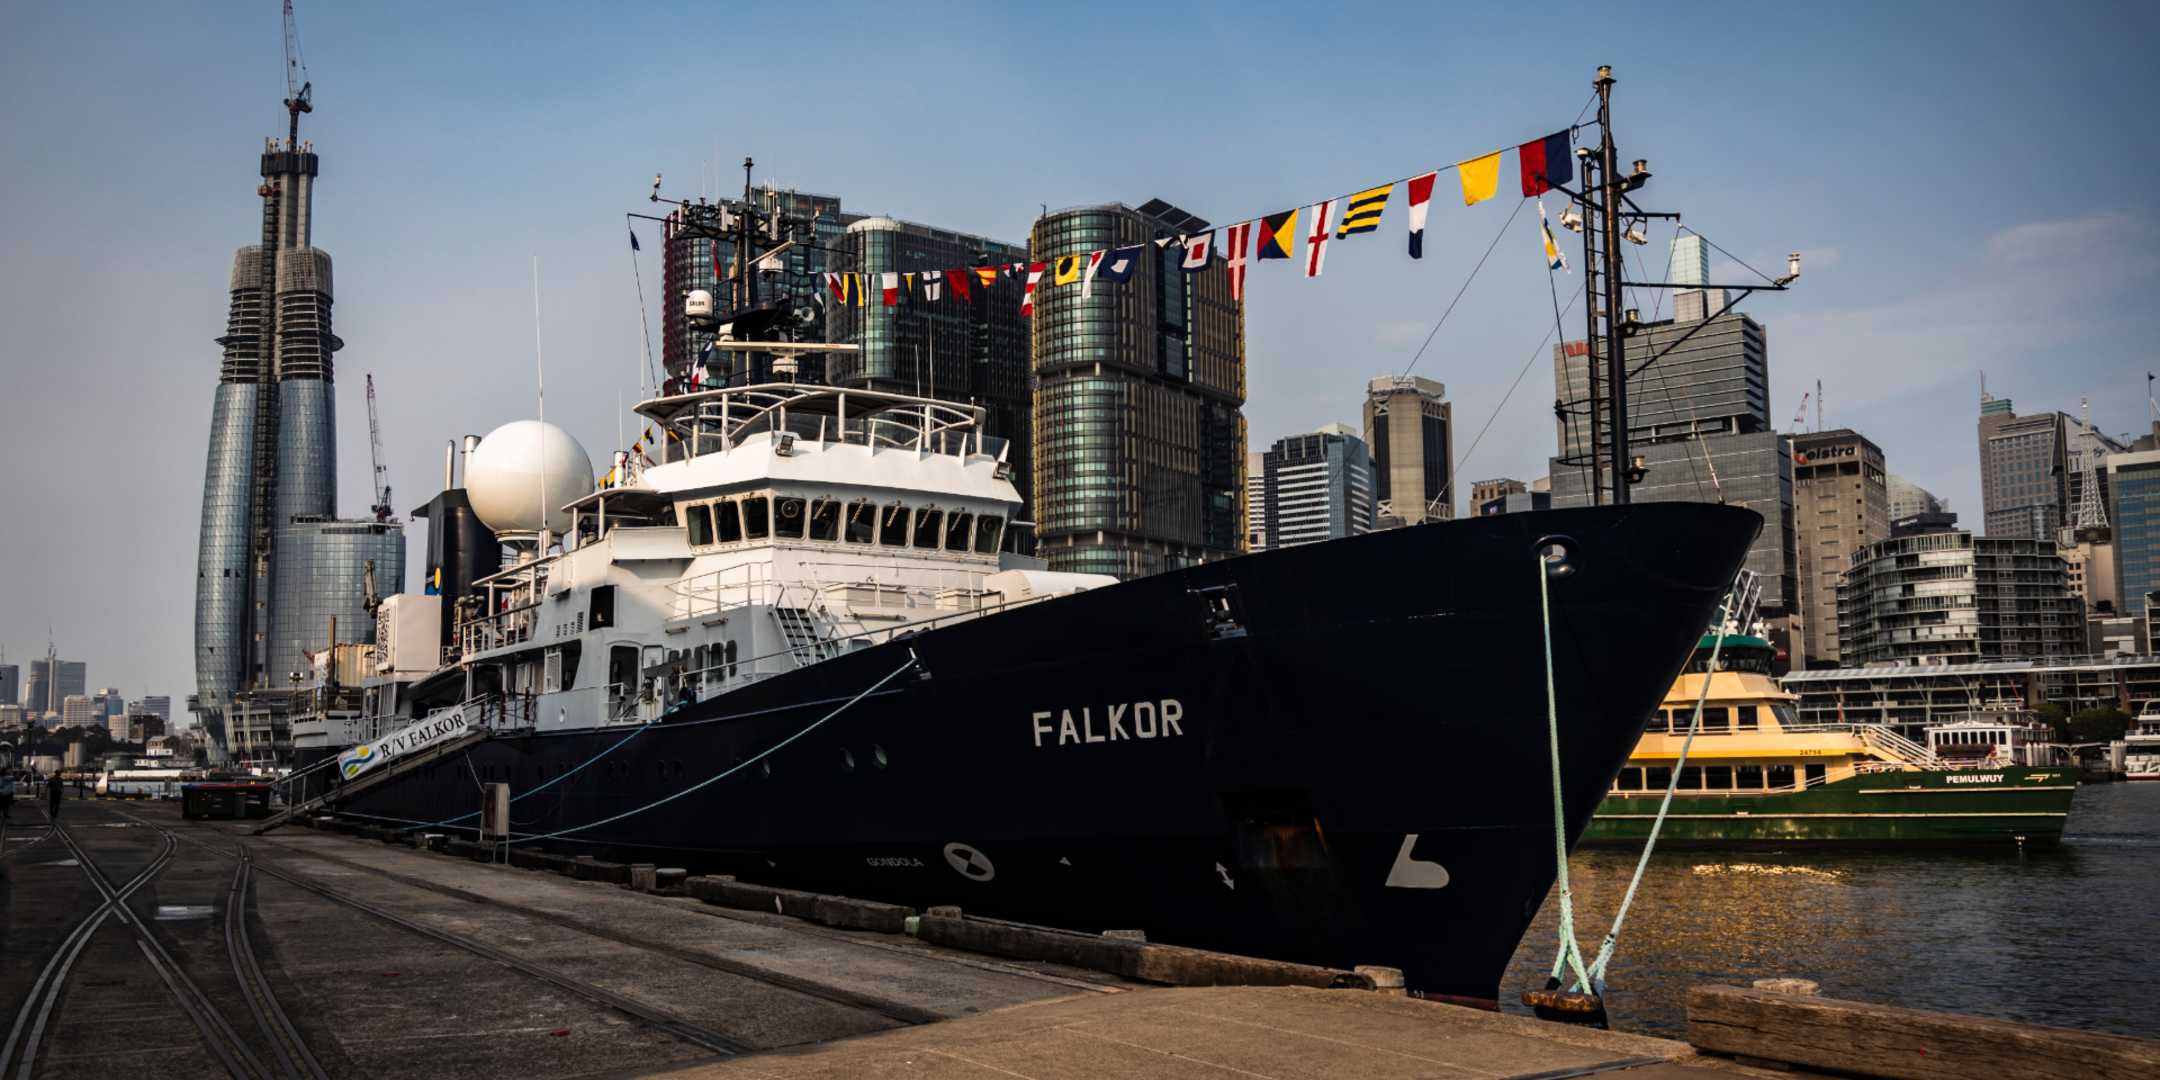 Schmidt Ocean Institute's RV Falkor berthed near the Australian National Maritime Museum in early January 2020